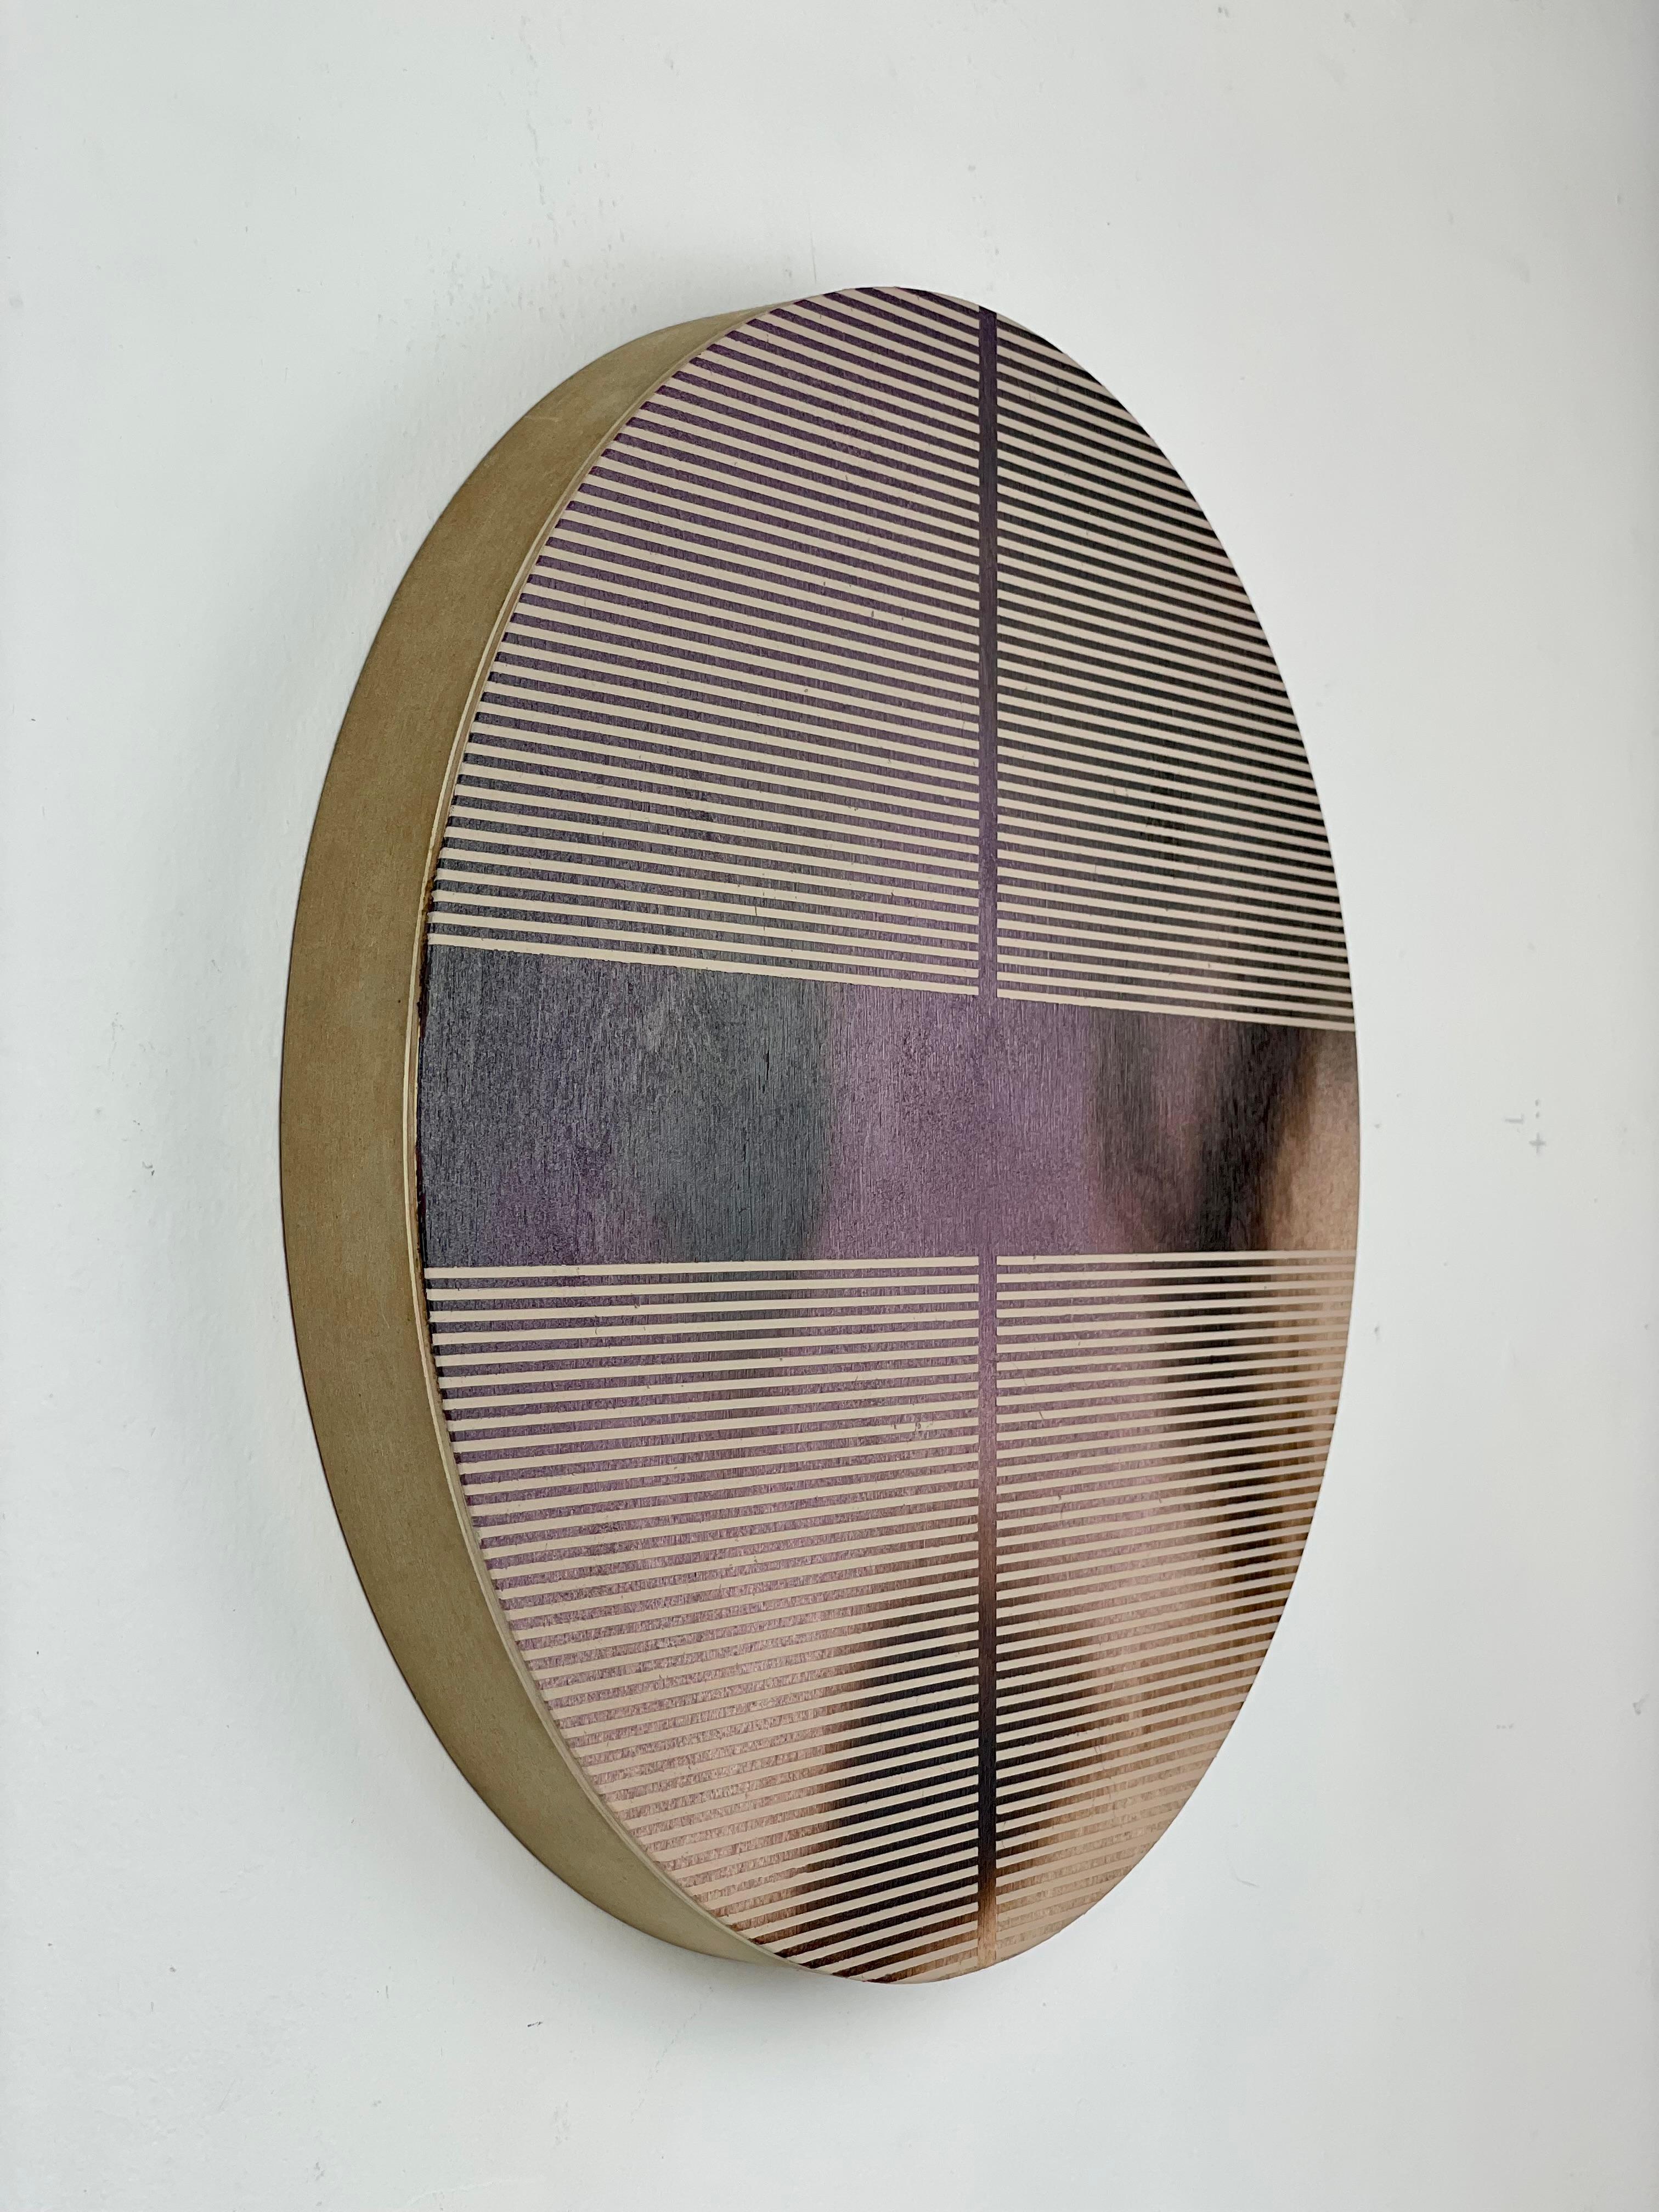 Aubergine Purple pill (minimaliste grid round painting on wood dopamine) - Abstract Geometric Mixed Media Art by Melisa Taylor Metzger